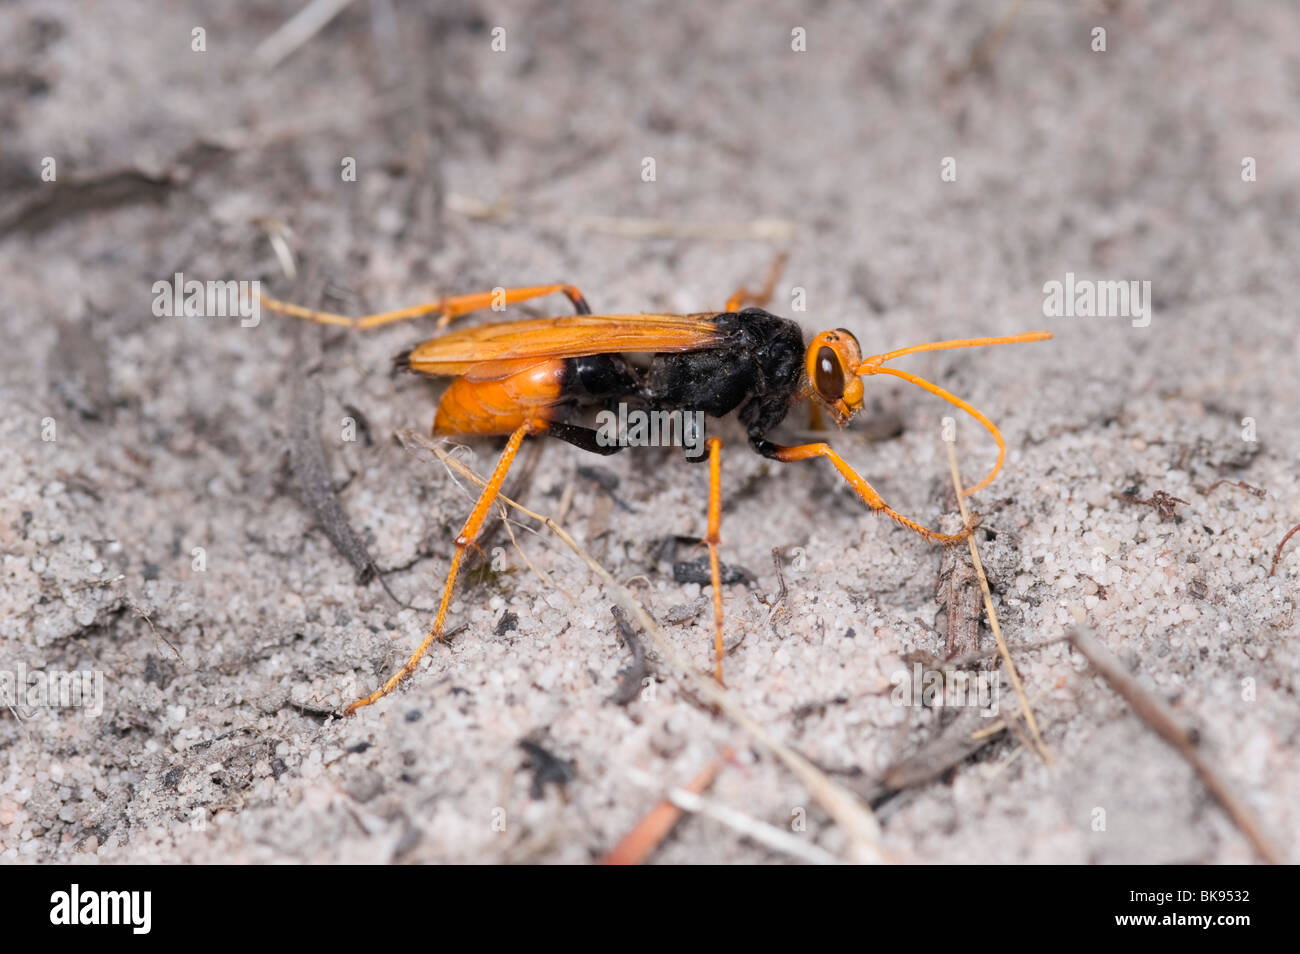 Orange and black spider hunting parasitic wasp Stock Photo